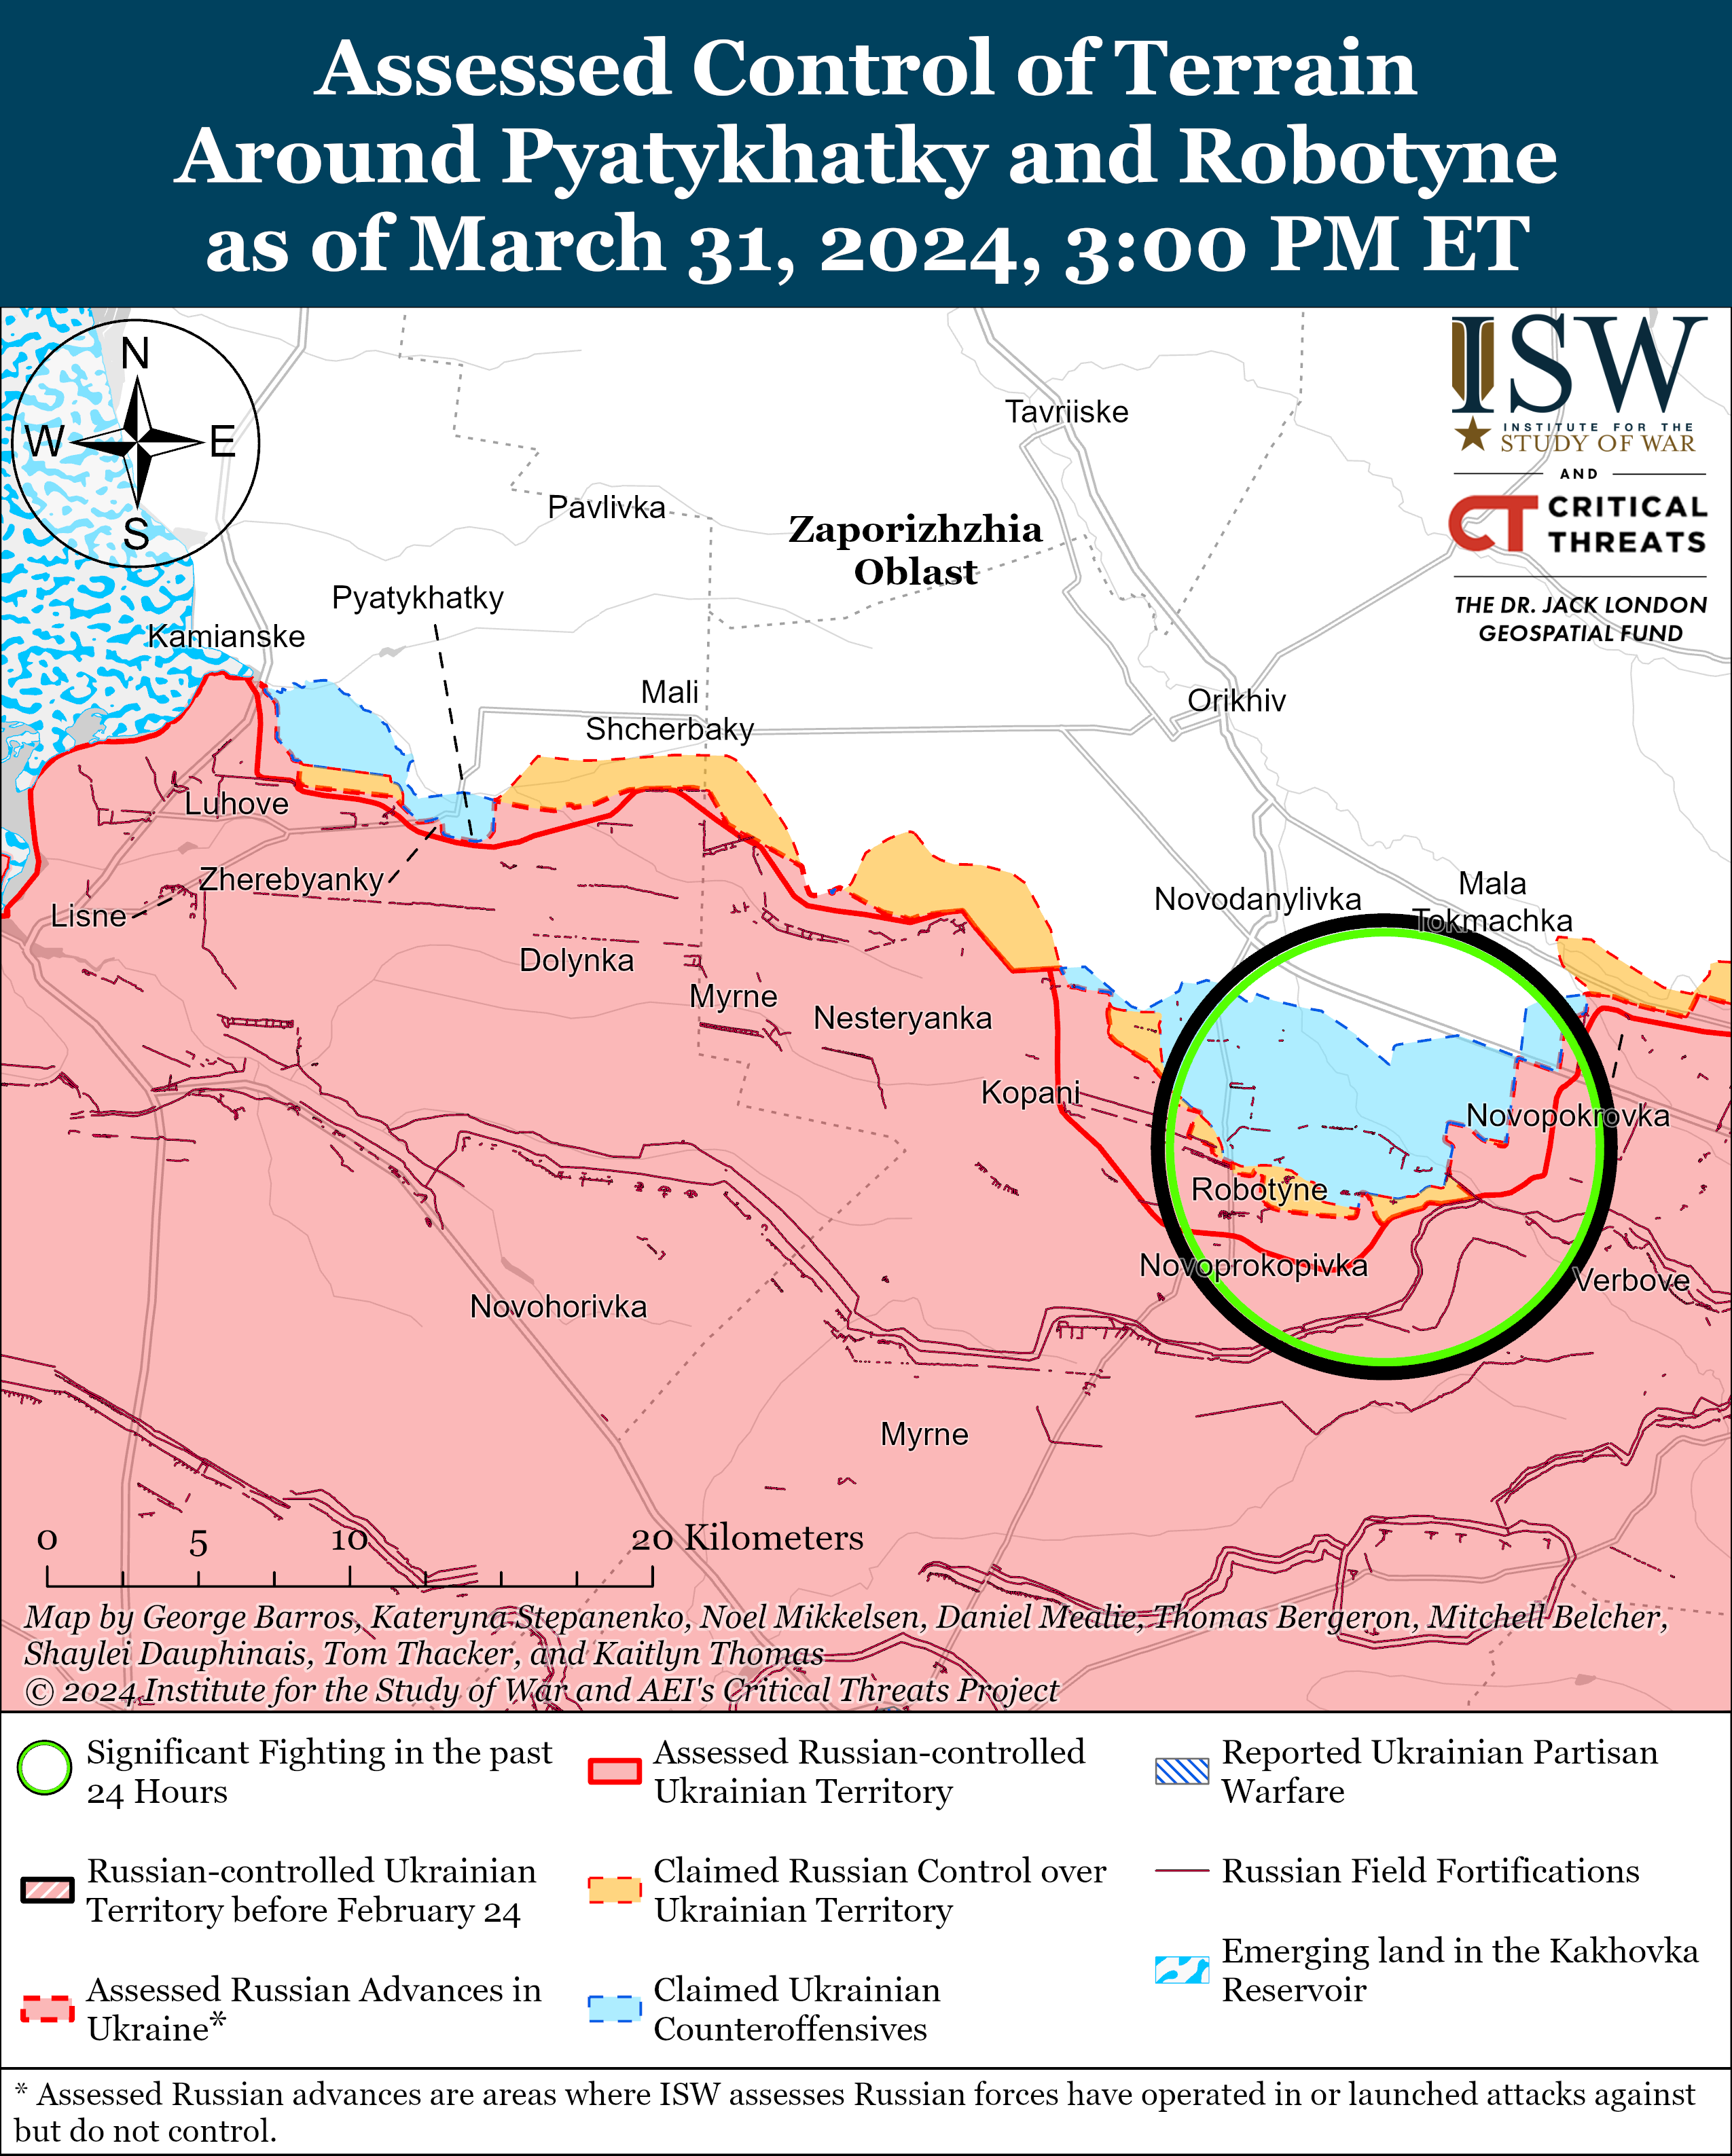 Pyatykhatky_and_Robotyne_Battle_Map_Draft_March_31_2024.png